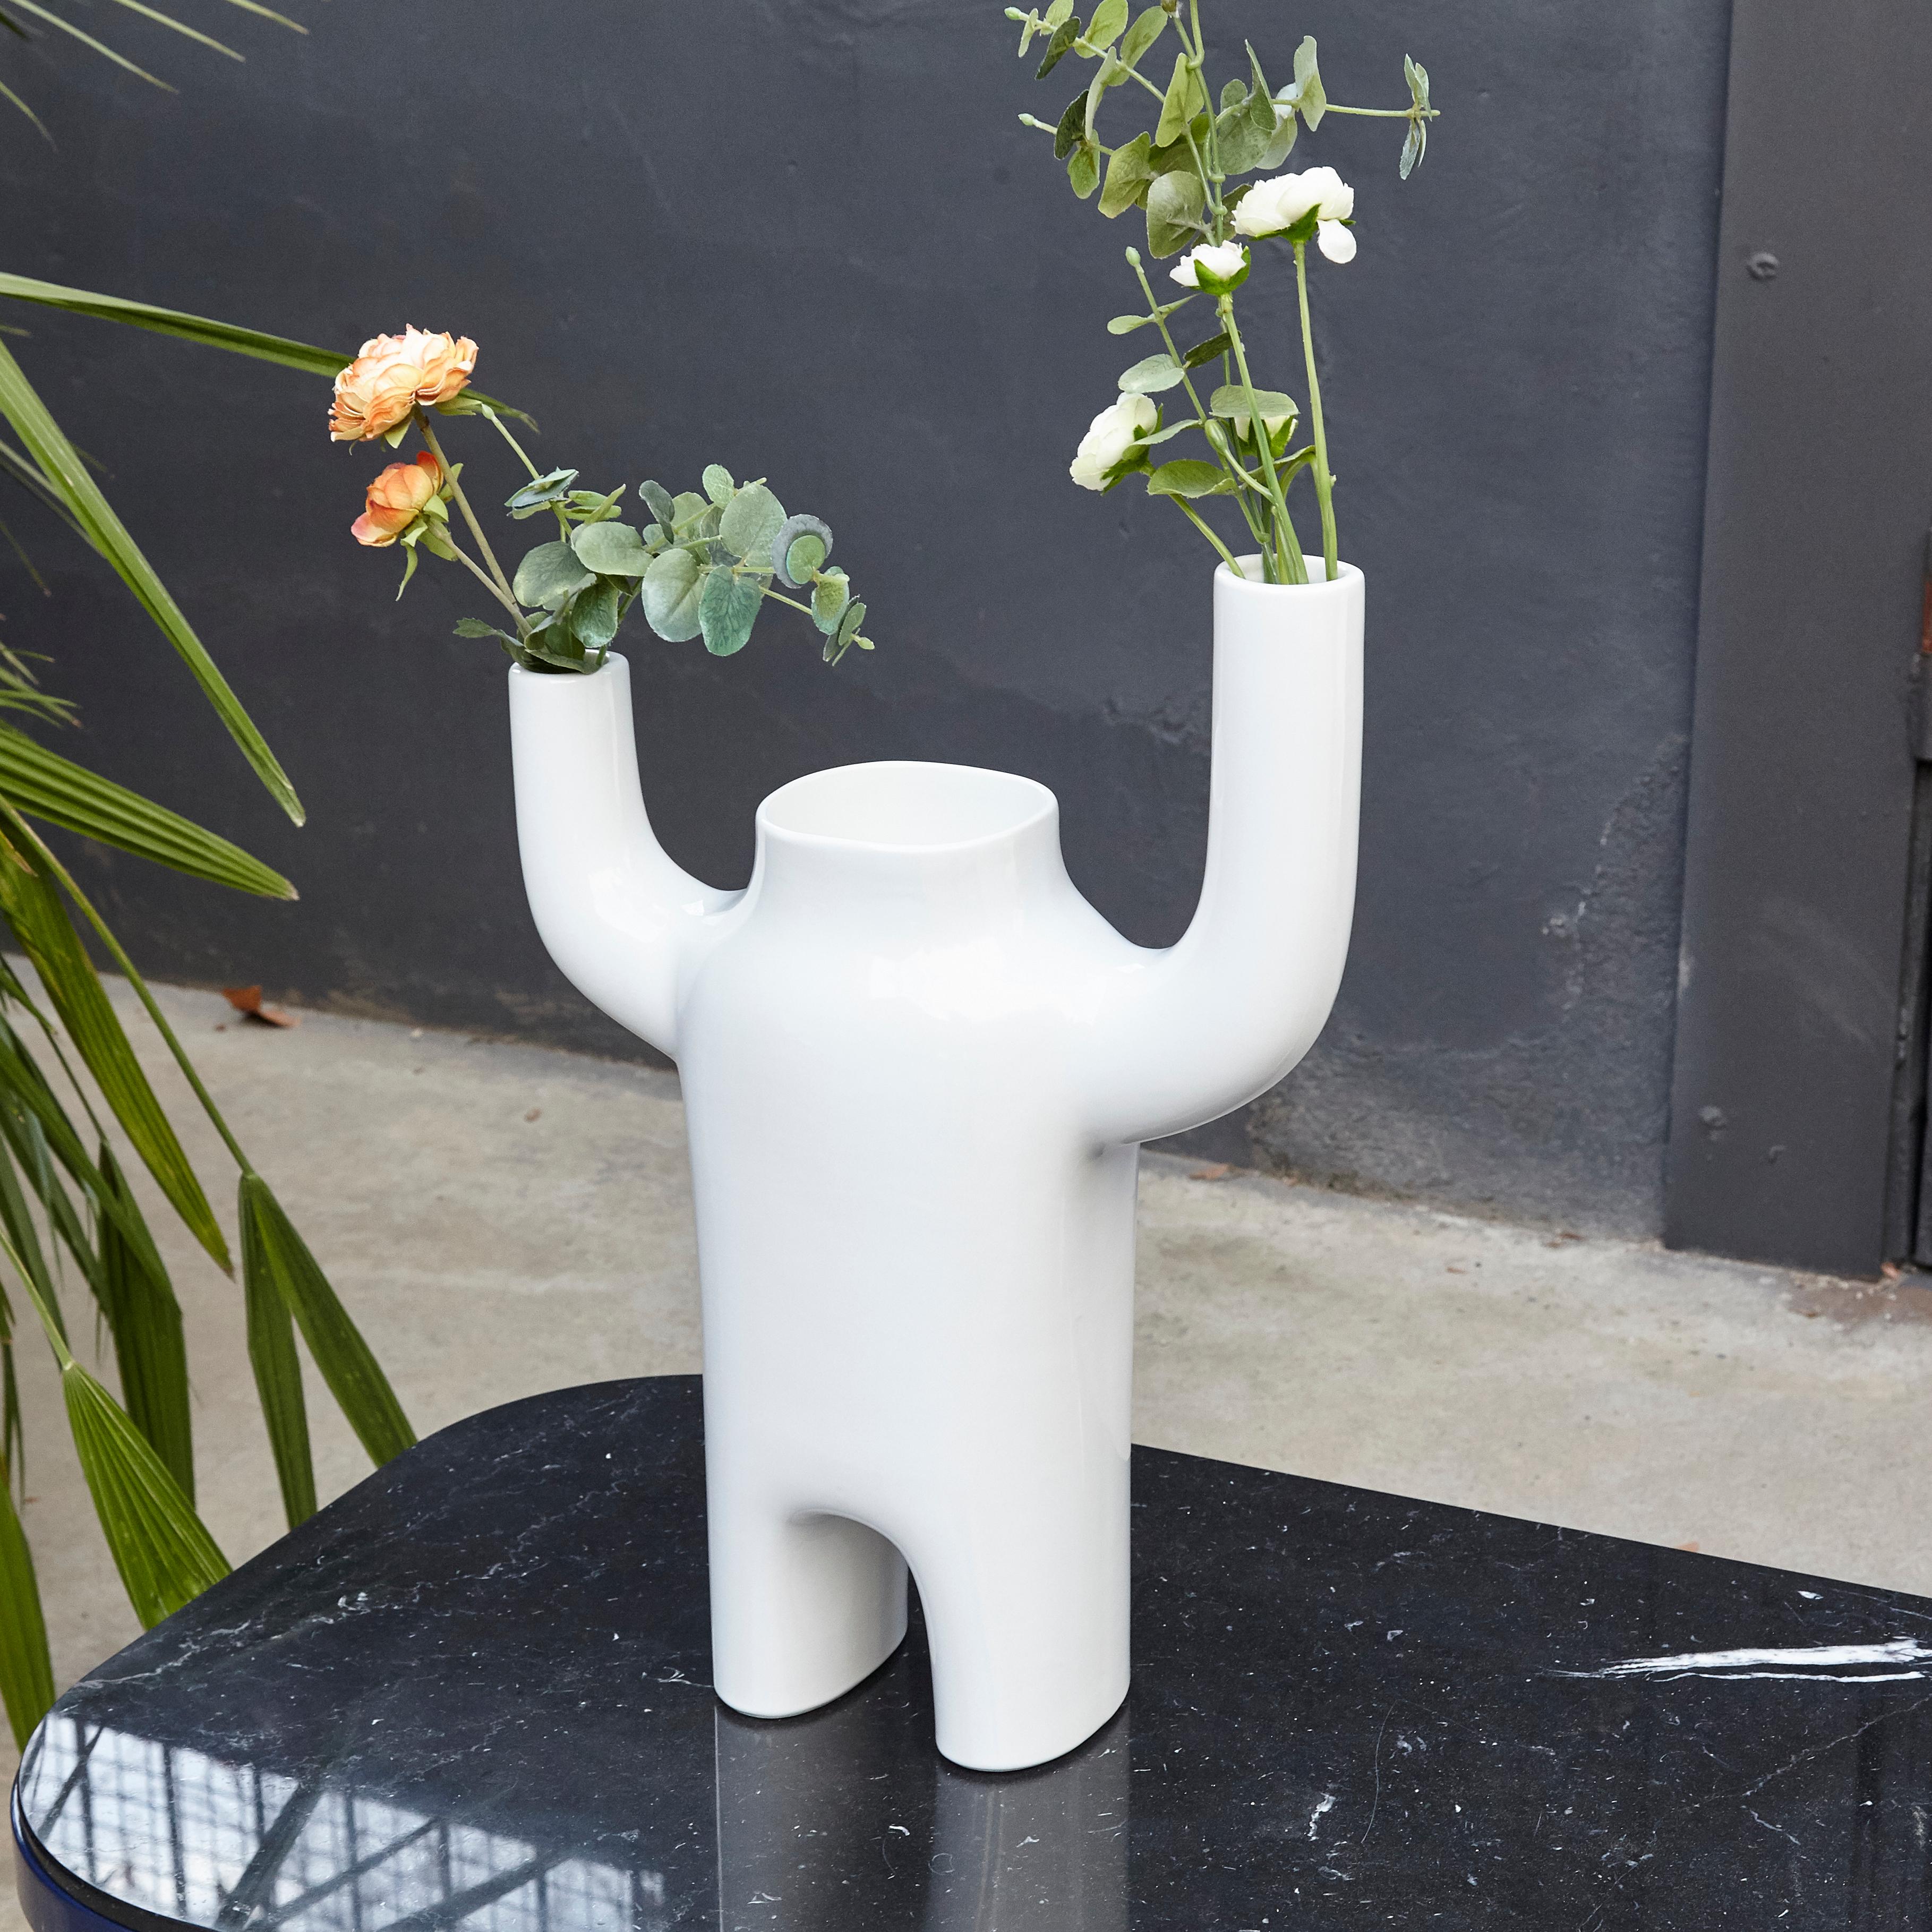 Ceramic Jaime Hayon Contemporary Big White Glazed Happy Susto Vase  For Sale